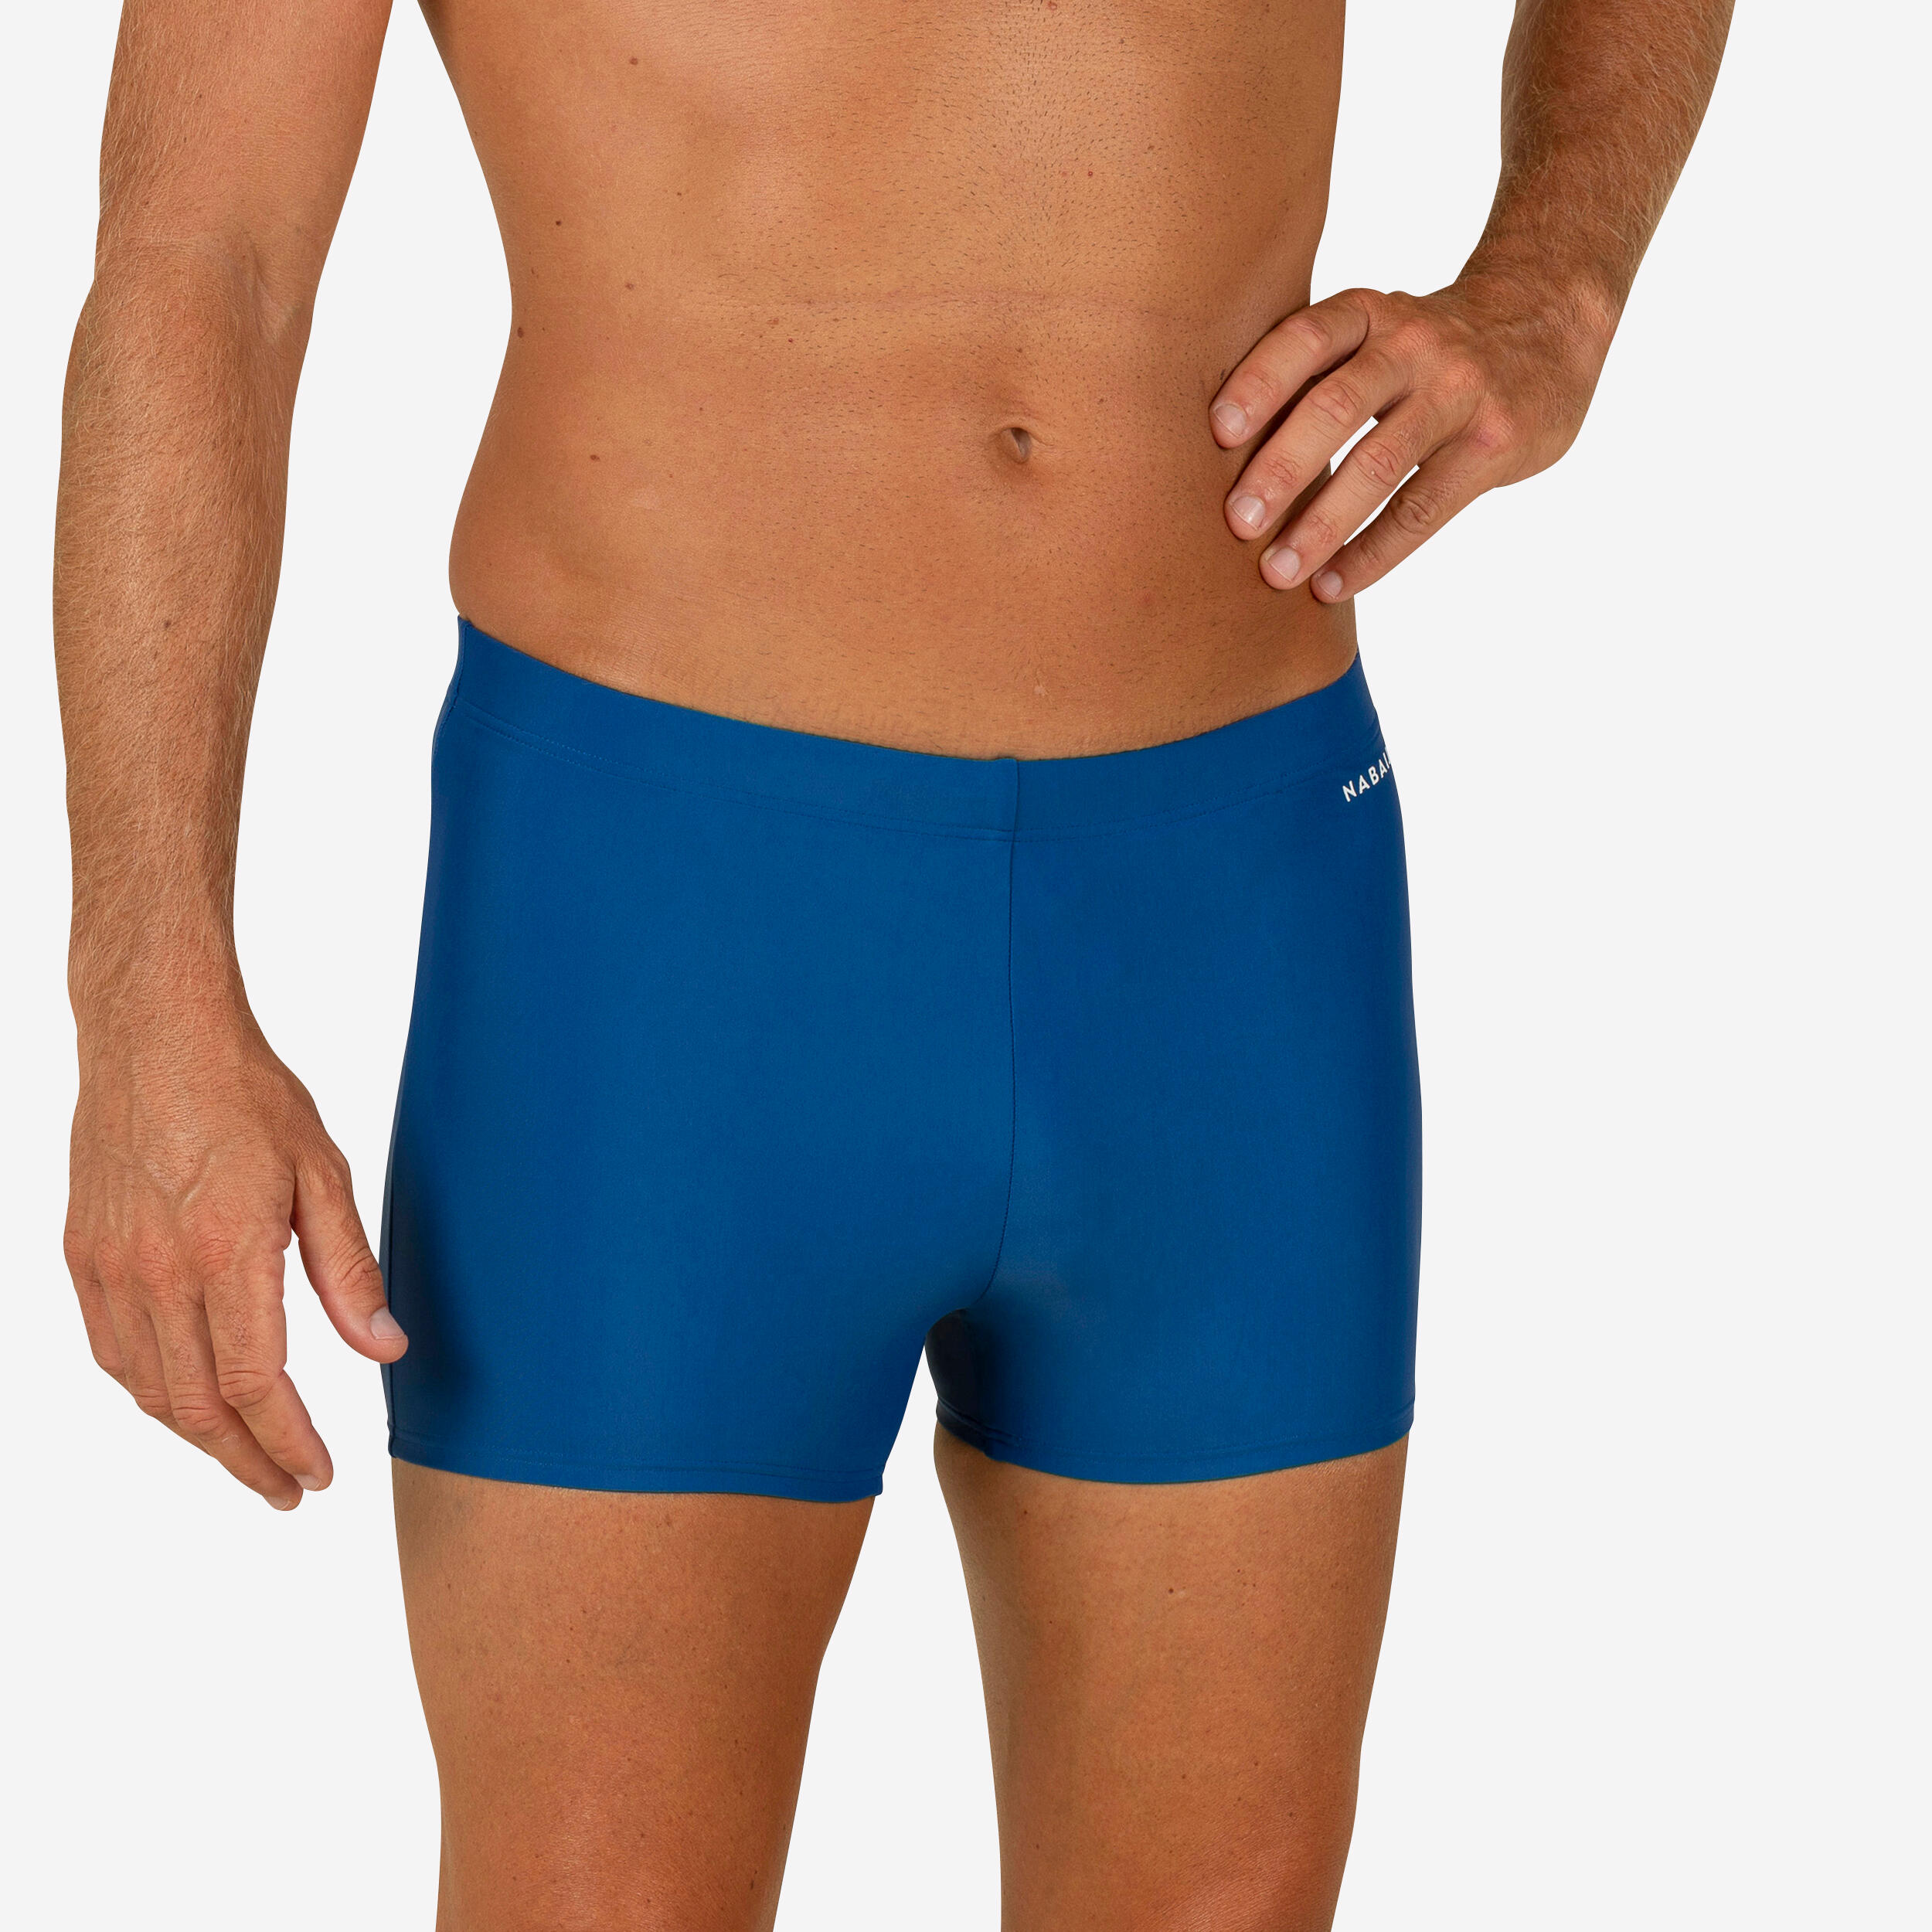 Men's breathable briefs - Dark blue - Decathlon